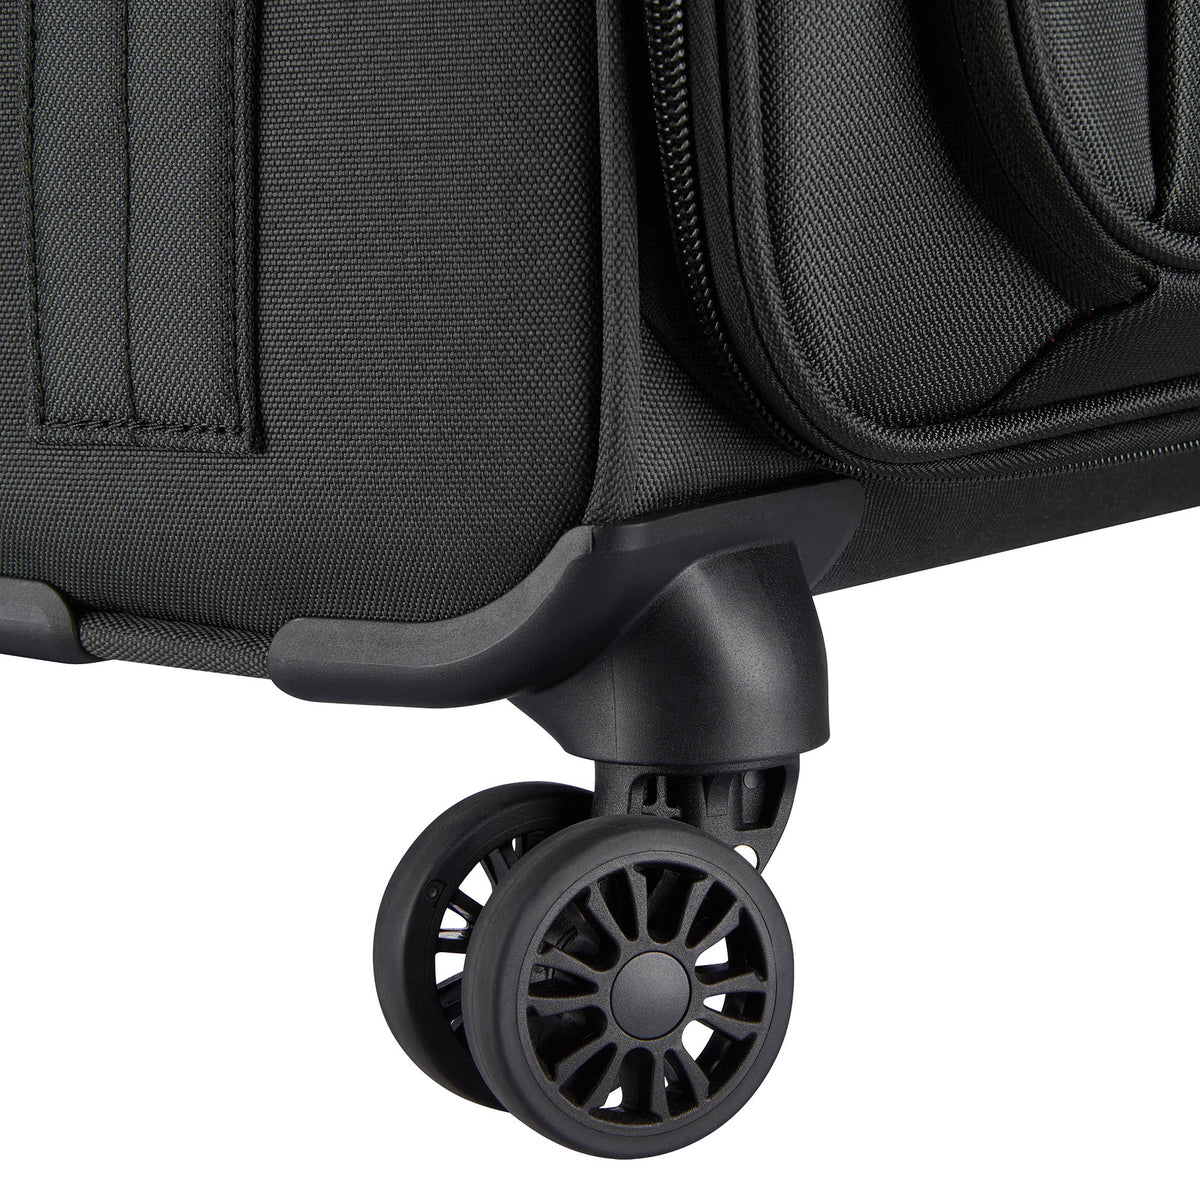 Delsey Pin Up 6 4 Wheel Slimline Cabin Suitcase - Black